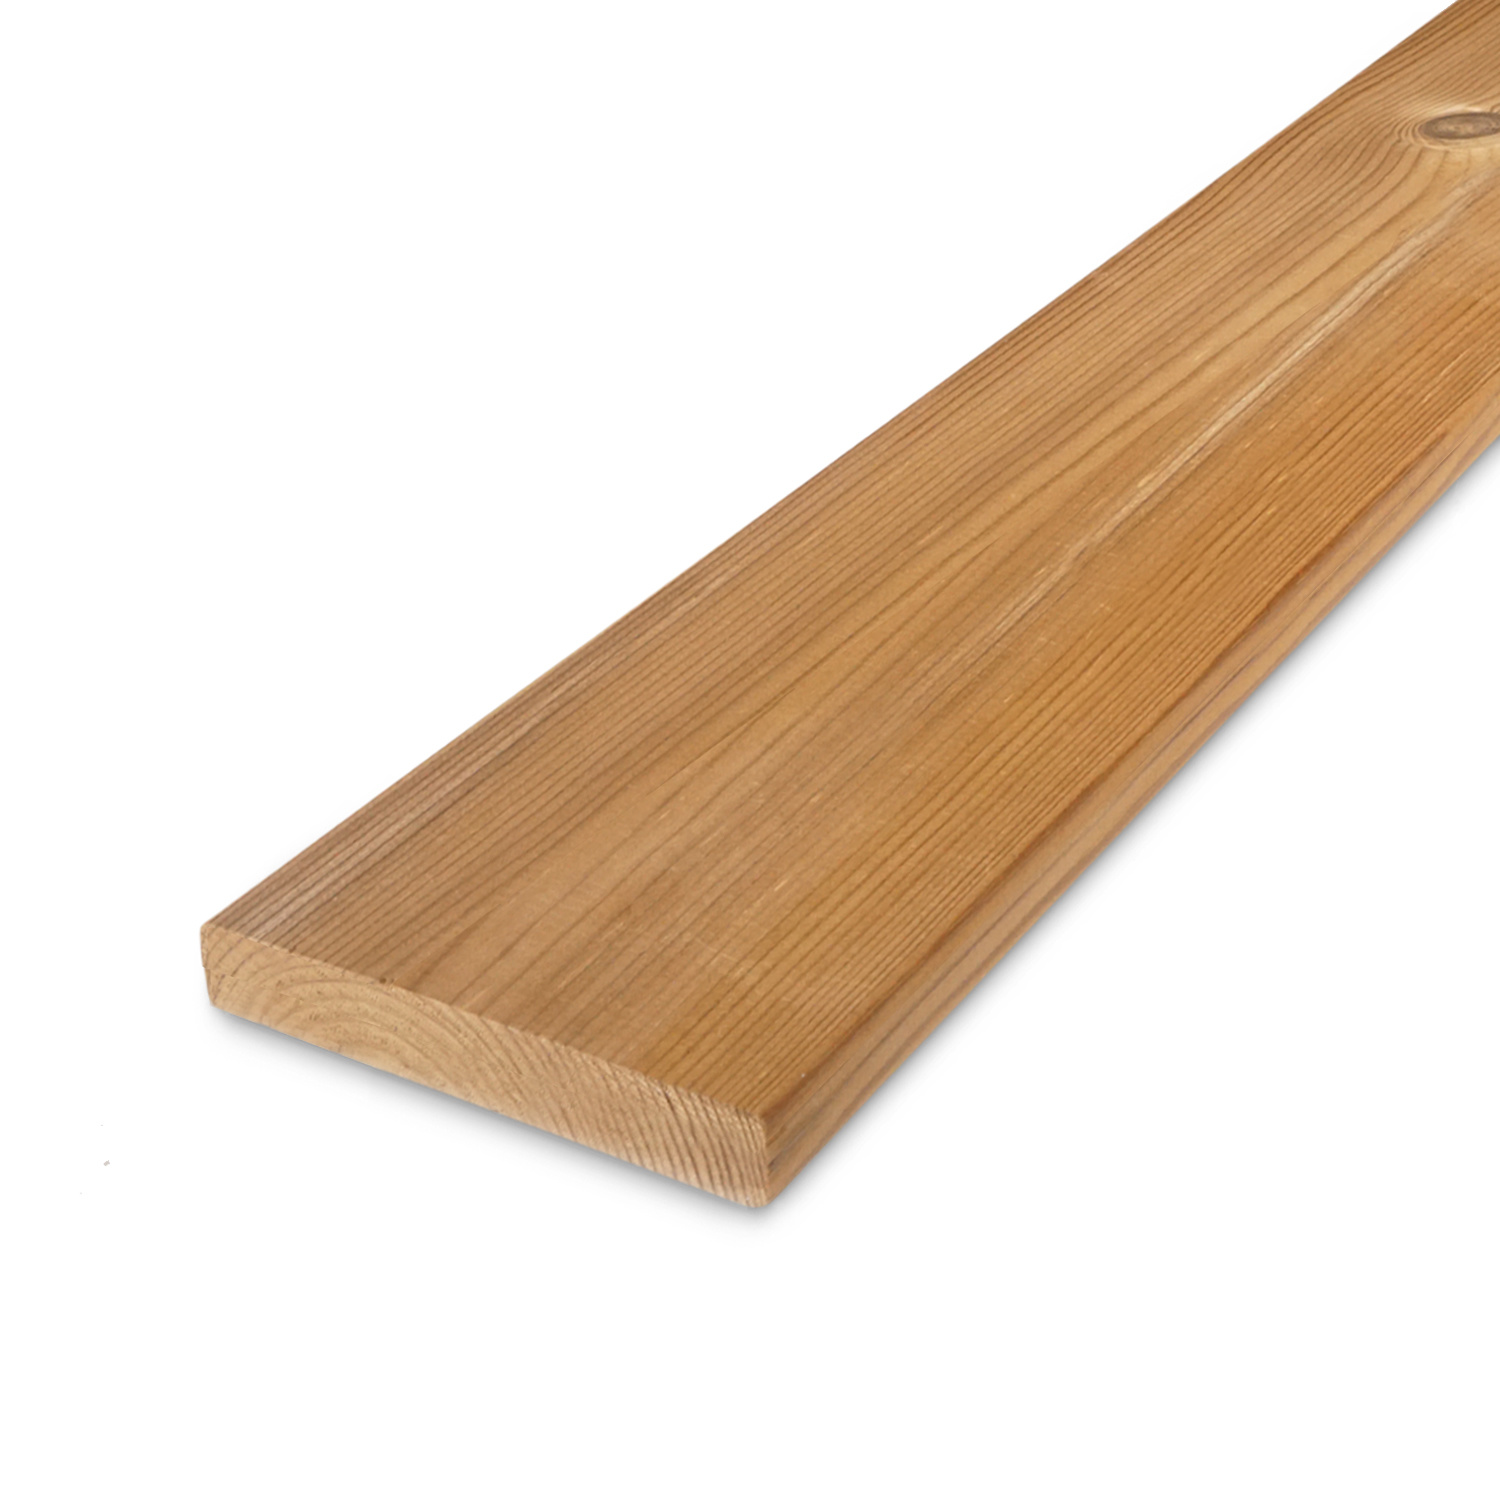 Afstoten Seraph neus Thermowood grenen plank 21x90mm - geschaafd thermo grenen kd (8-12%) |  HOUTvakman